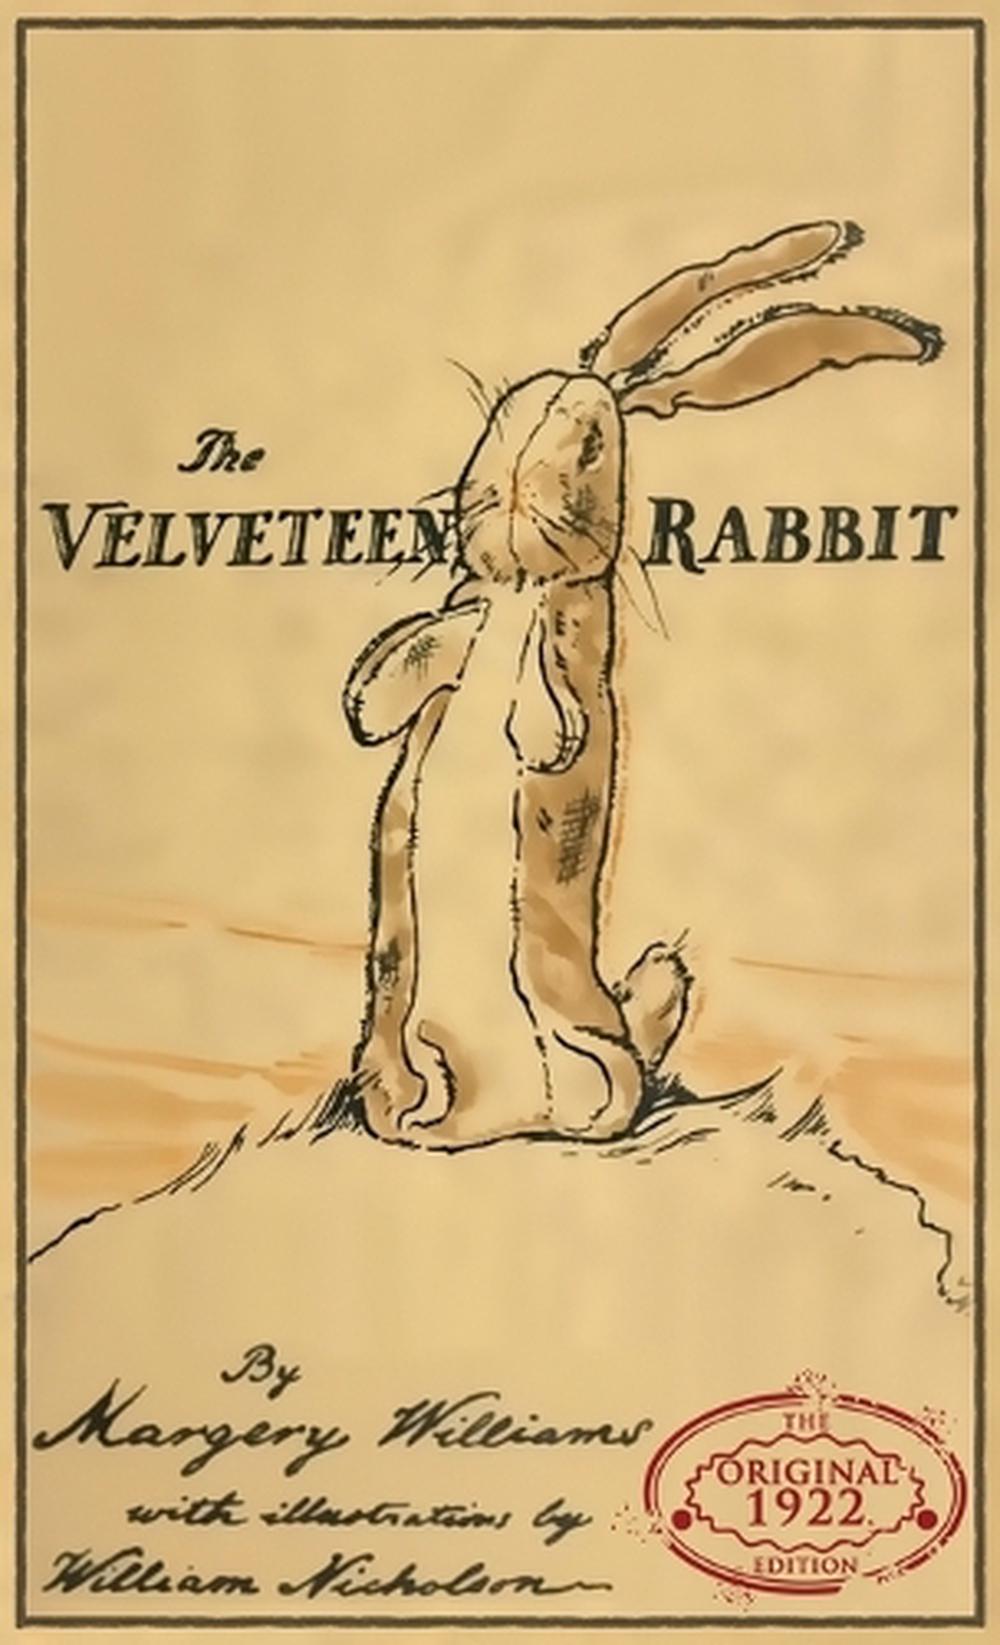 Download The Velveteen Rabbit: The Original 1922 Edition in Full ...